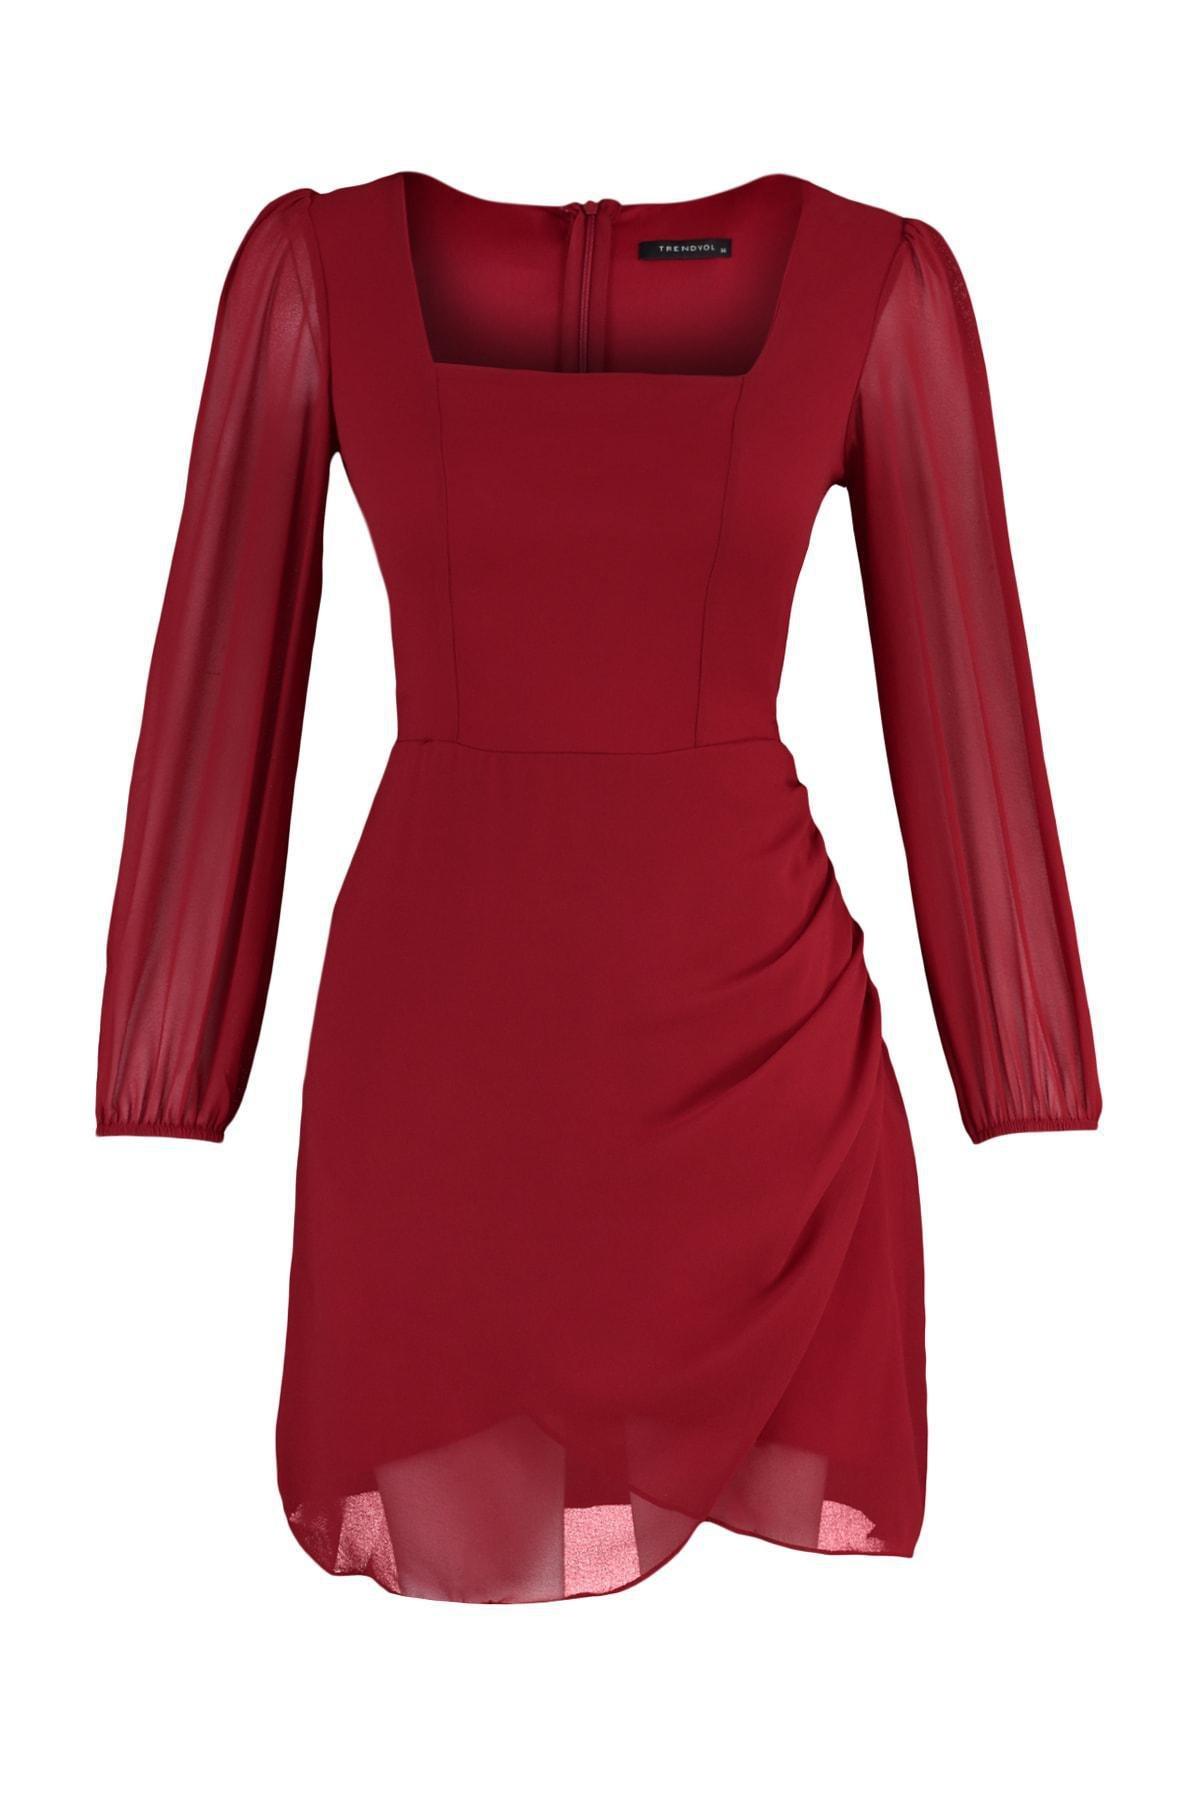 Trendyol - Burgundy A-Line Dress